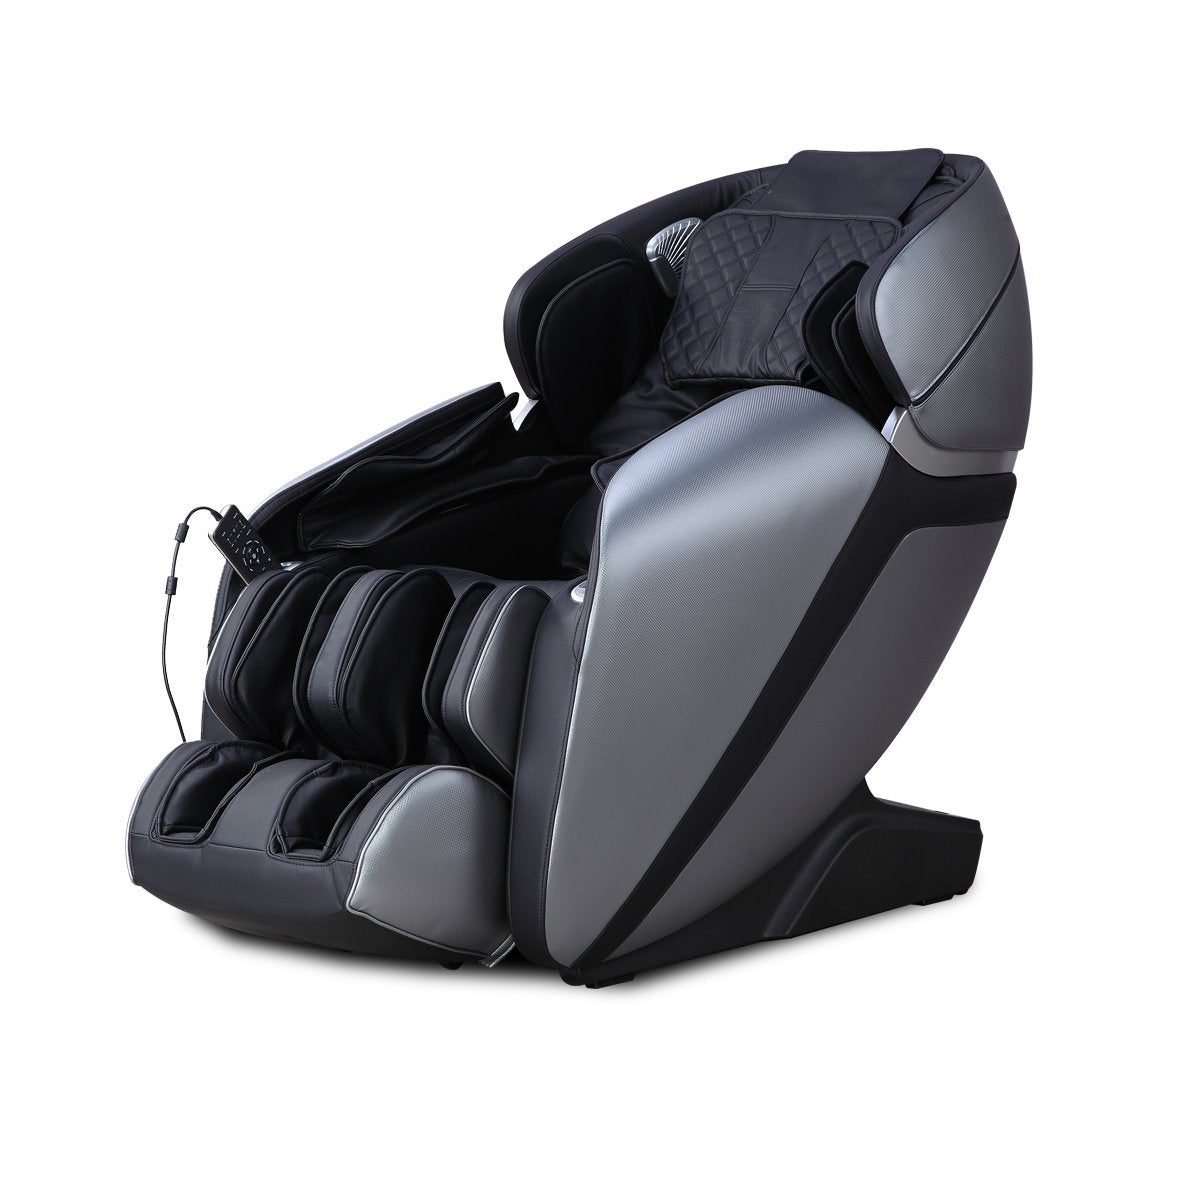 Kahuna LM7000 massage chair black